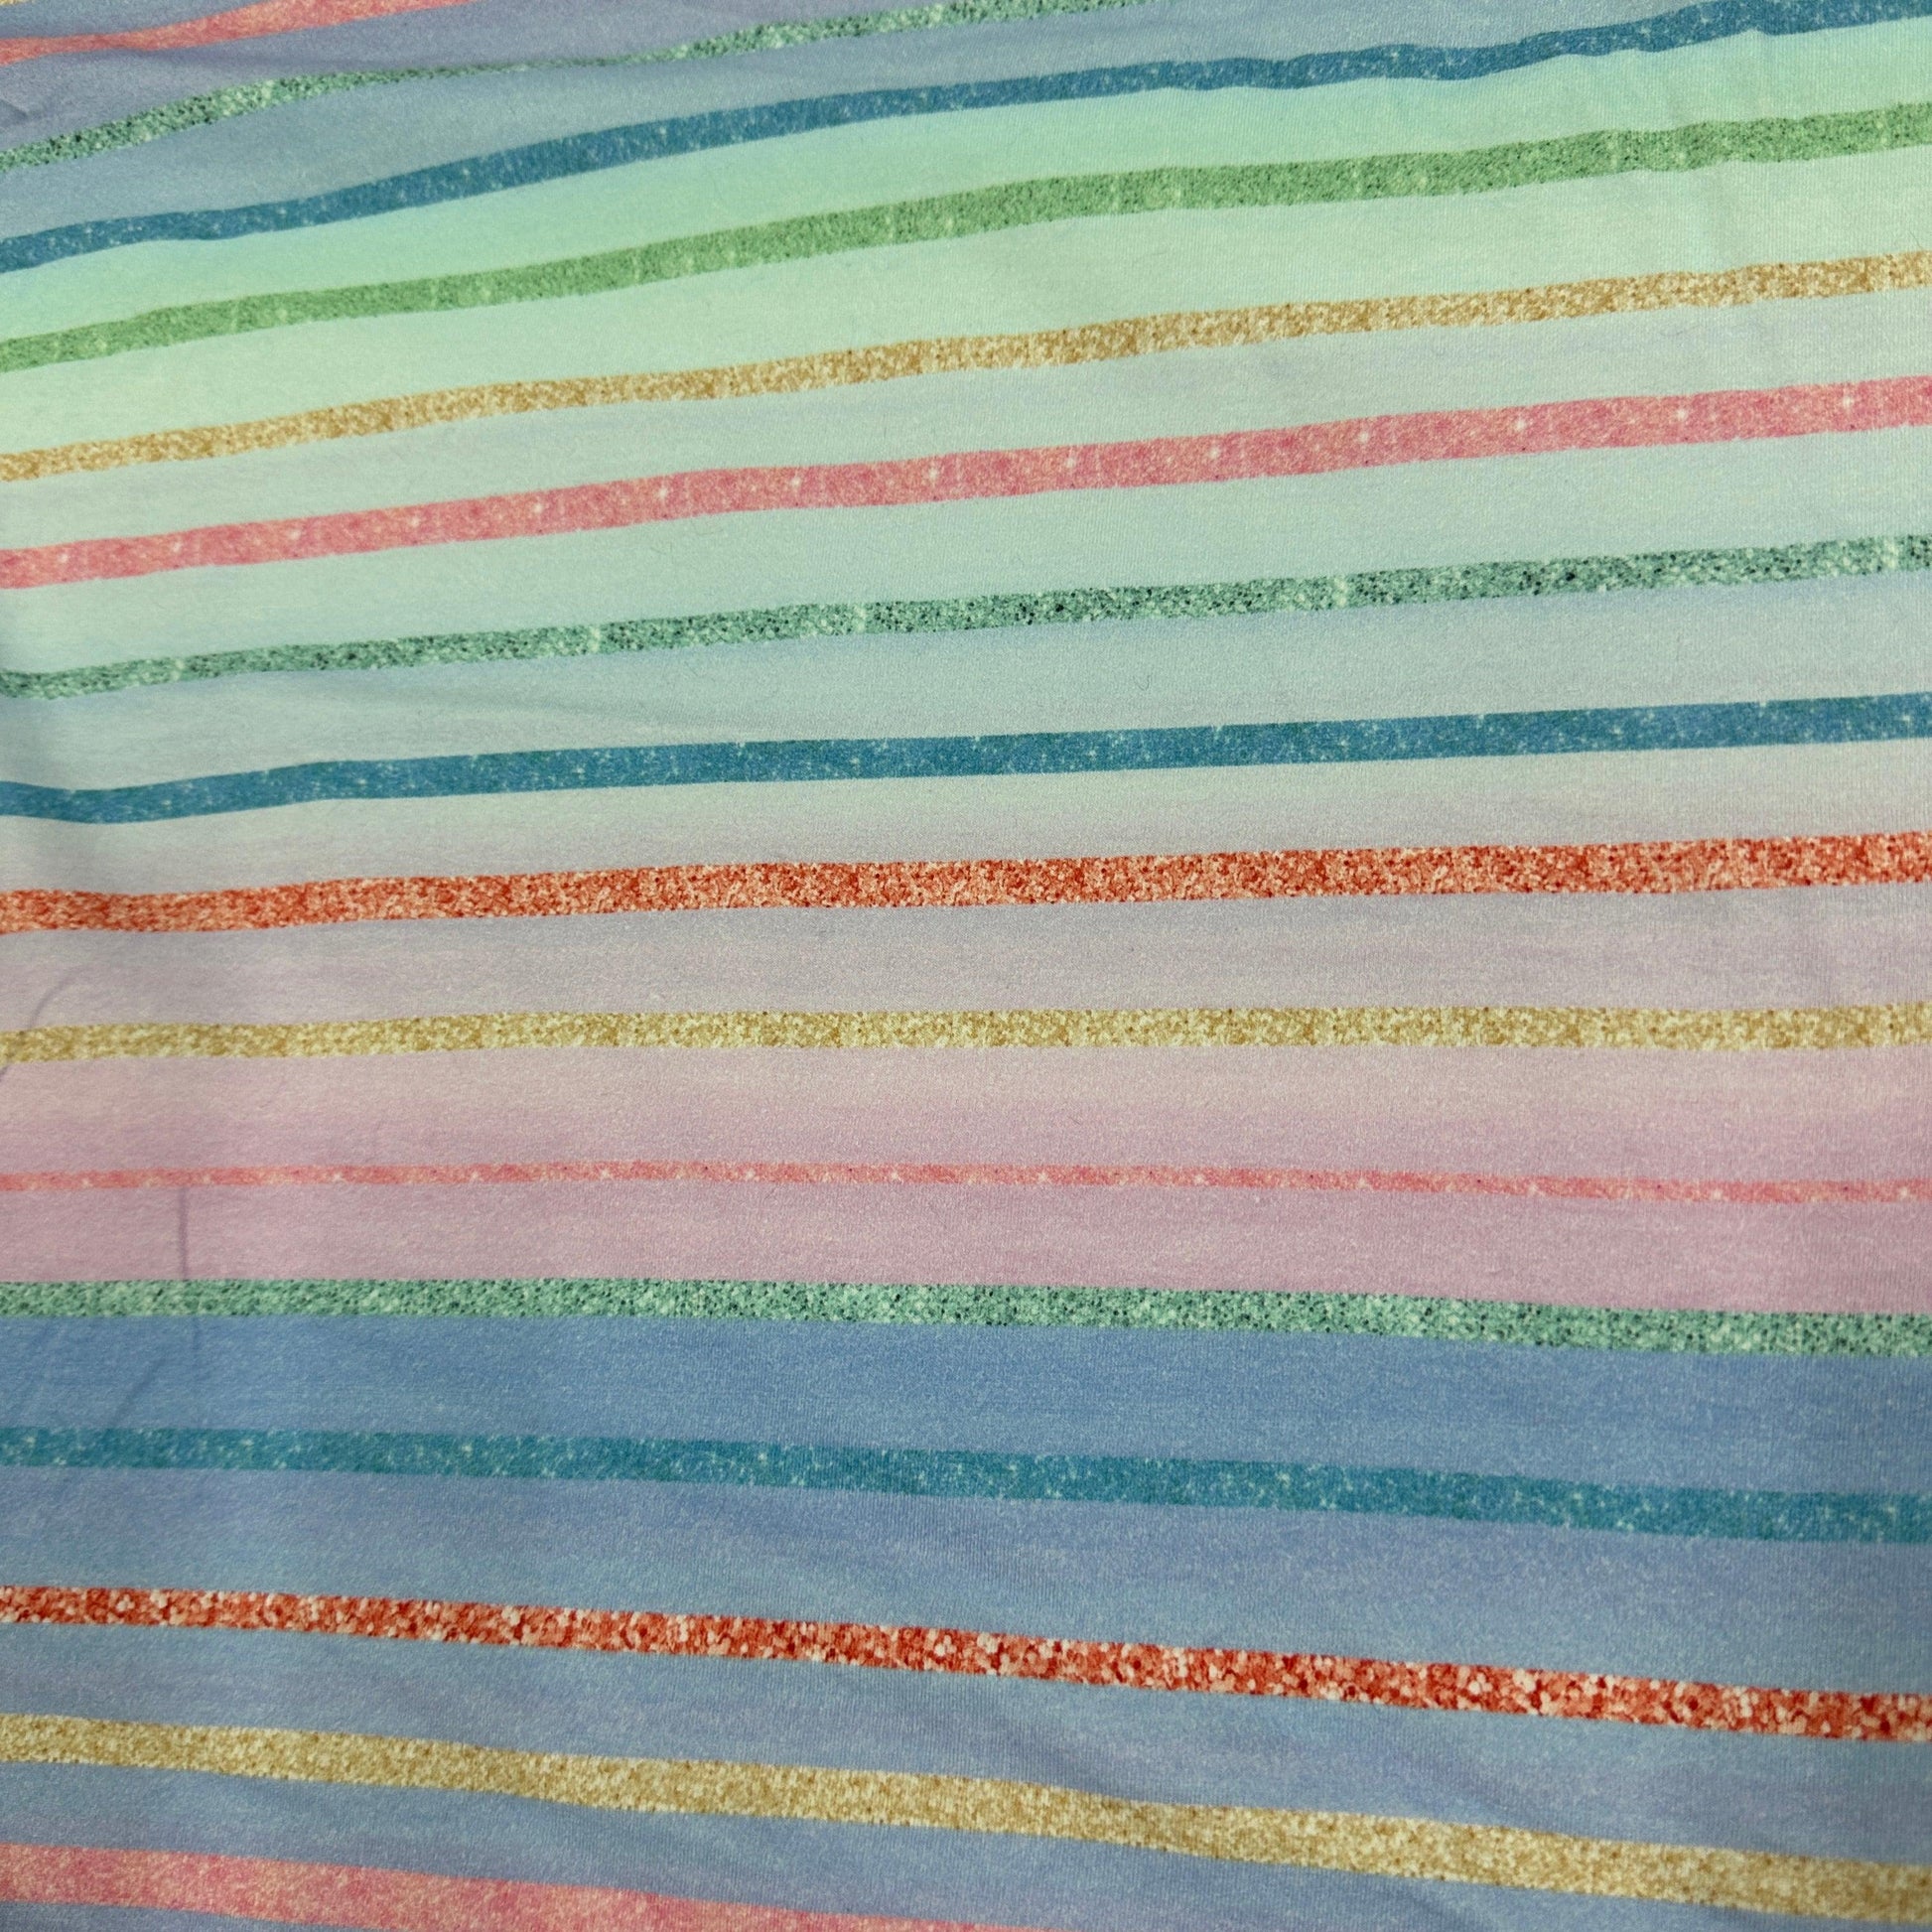 Pastel Glitter Stripe Cotton/Spandex Jersey Fabric - Nature's Fabrics